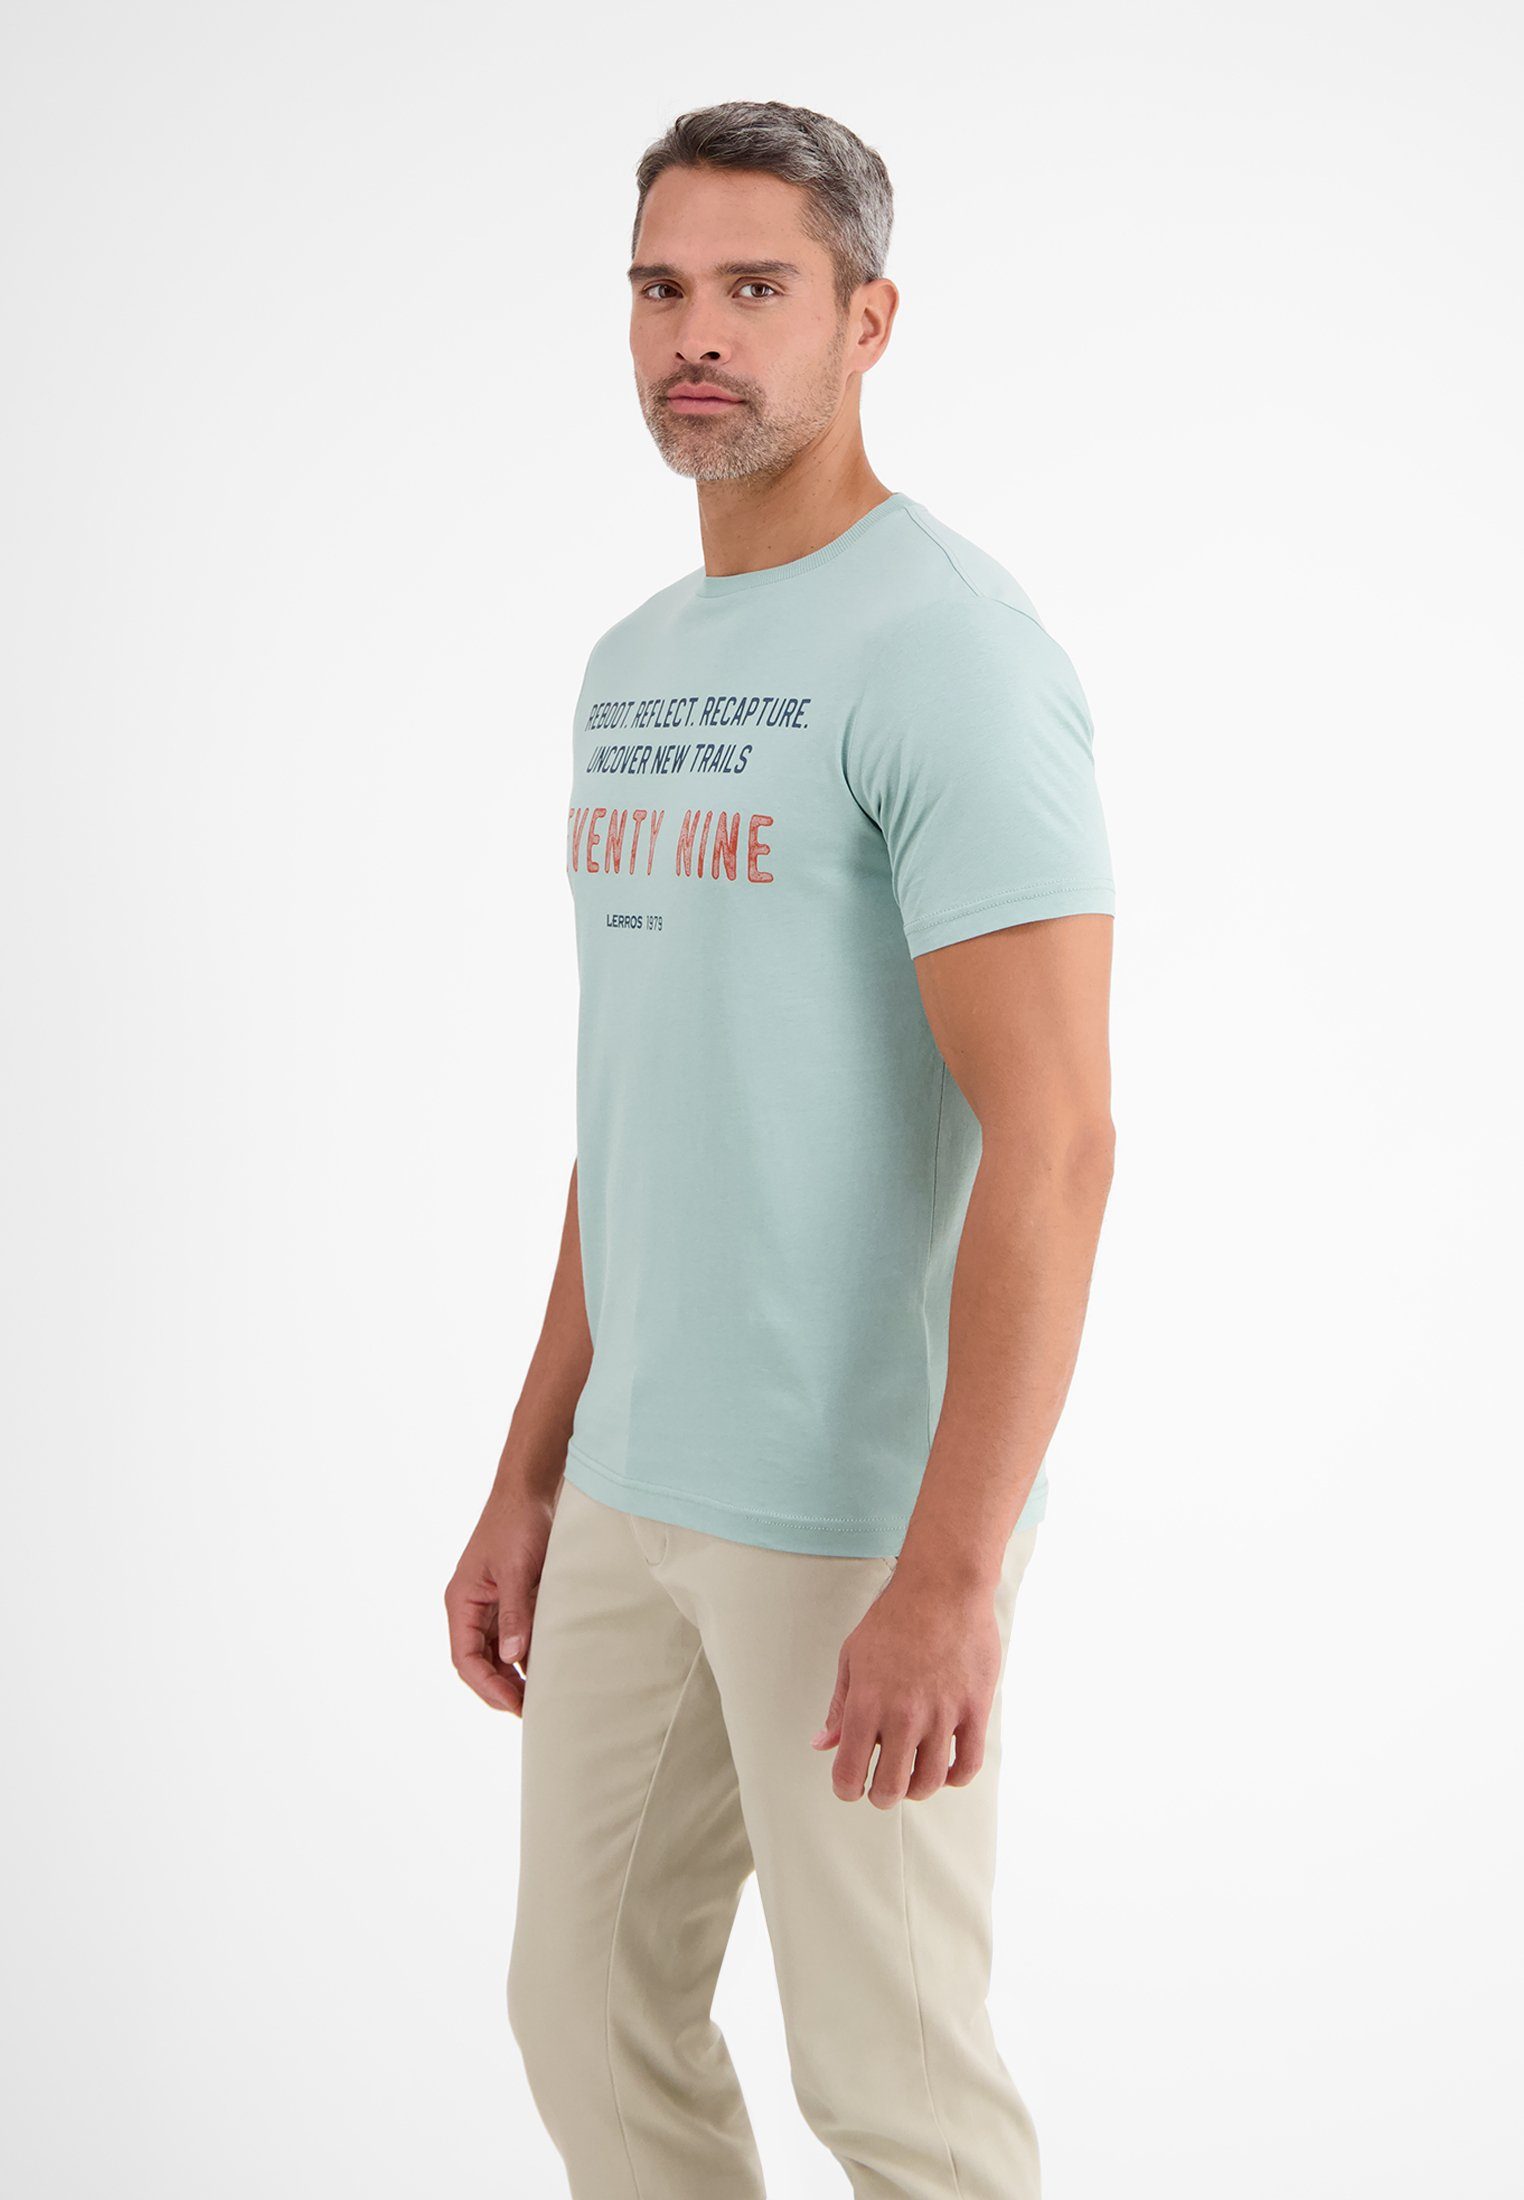 LERROS *Seventy mit Nine* T-Shirt Brustprint LERROS GREEN T-Shirt